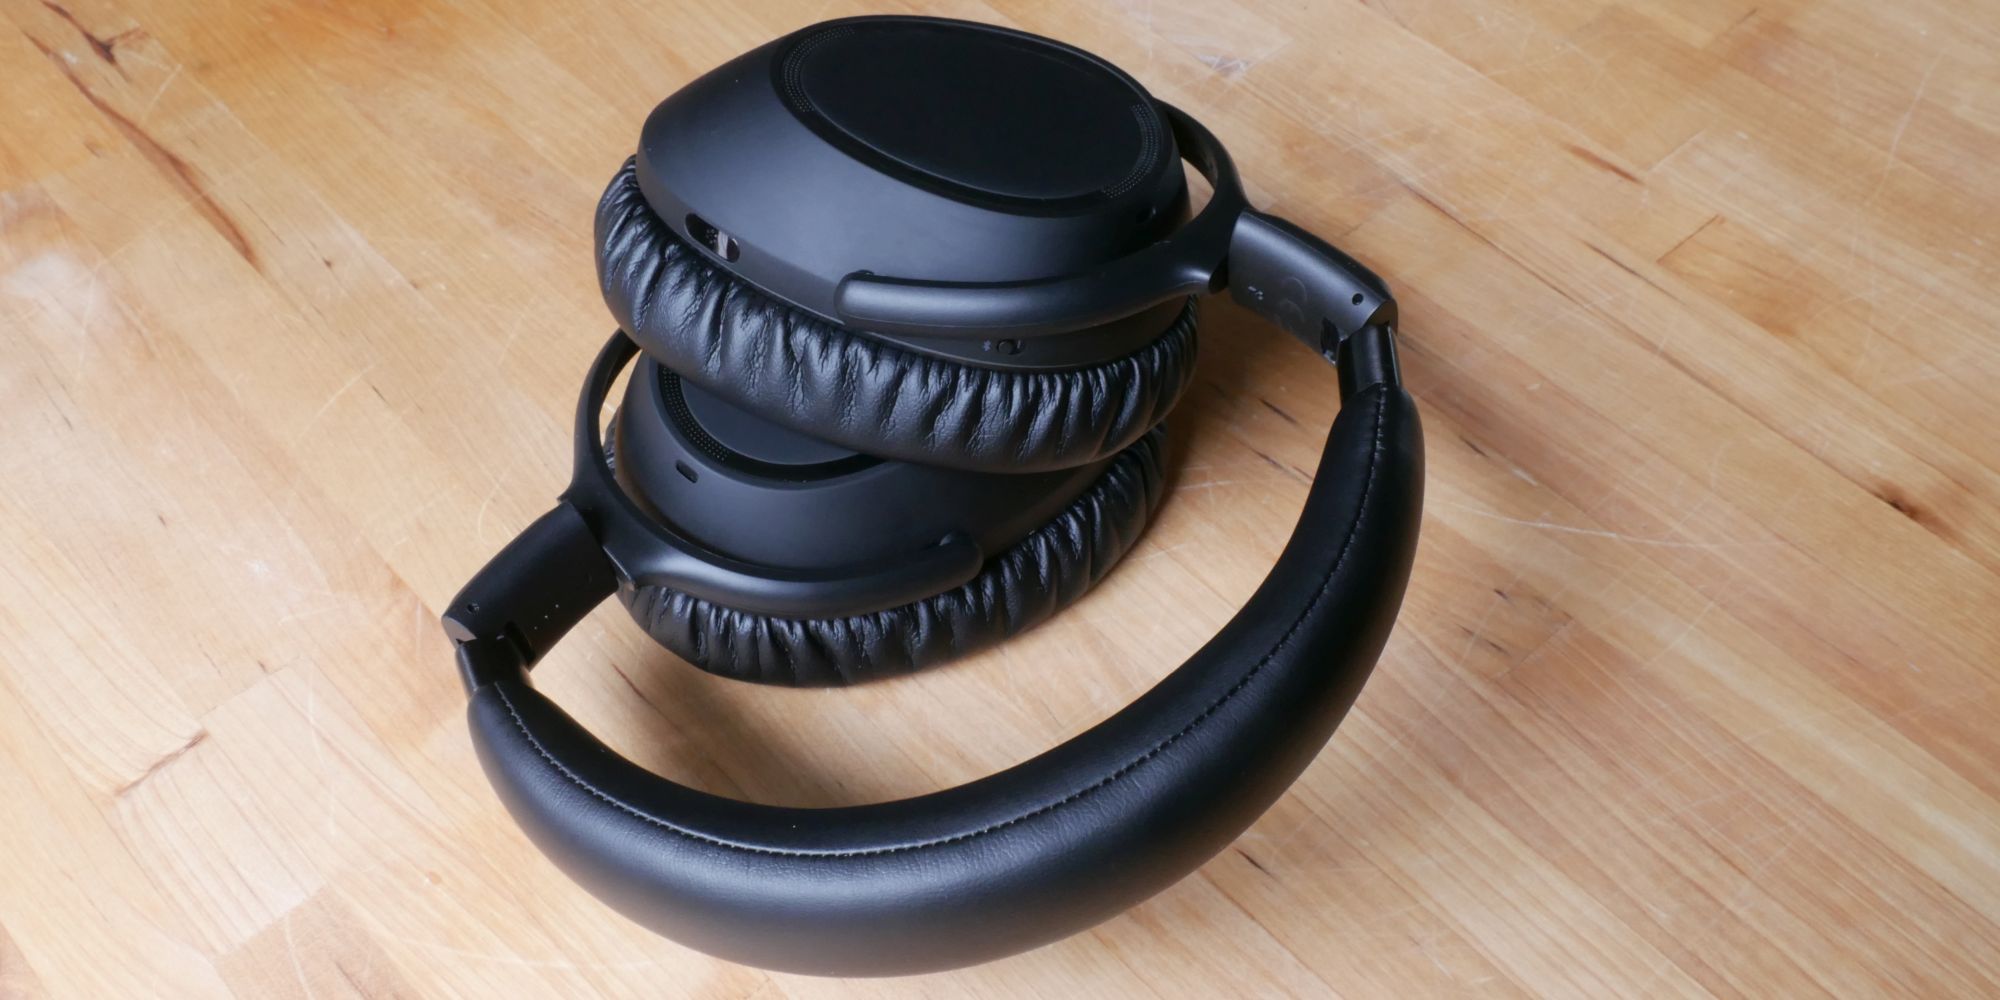 Sennheiser PXC 550-II Wireless ANC travel headphones folded